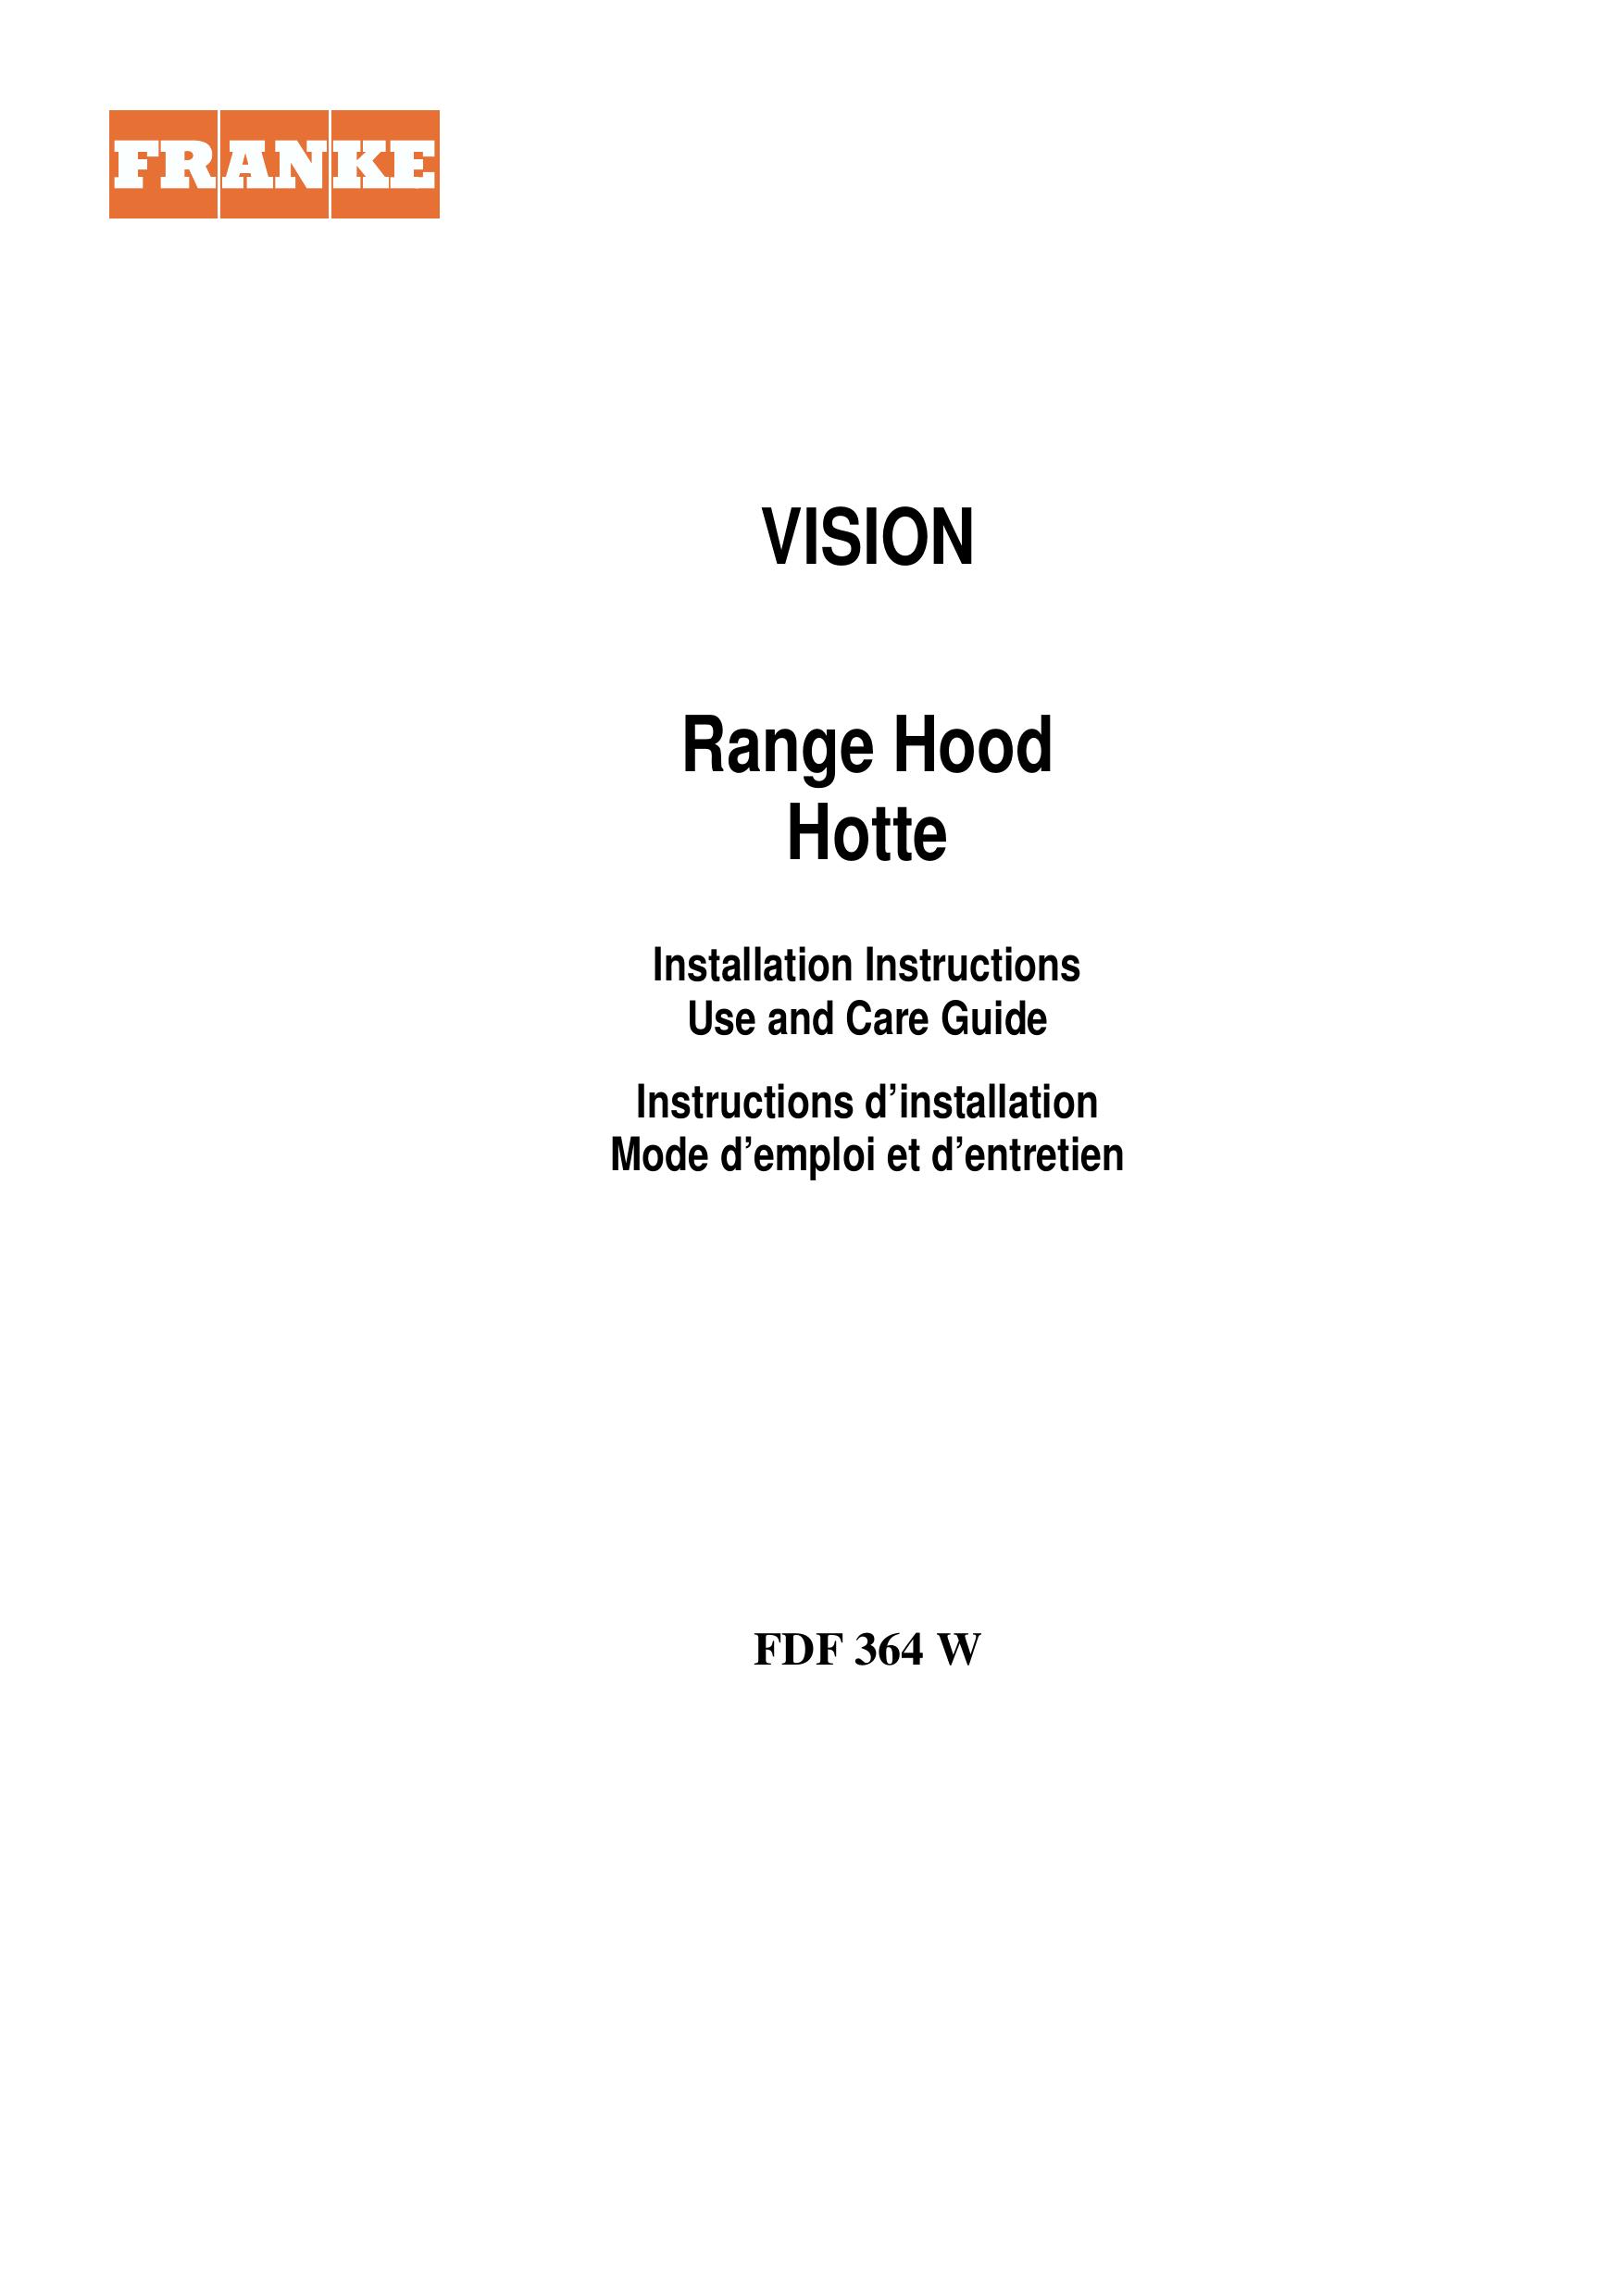 Franke Consumer Products FDF 364 W Ventilation Hood User Manual